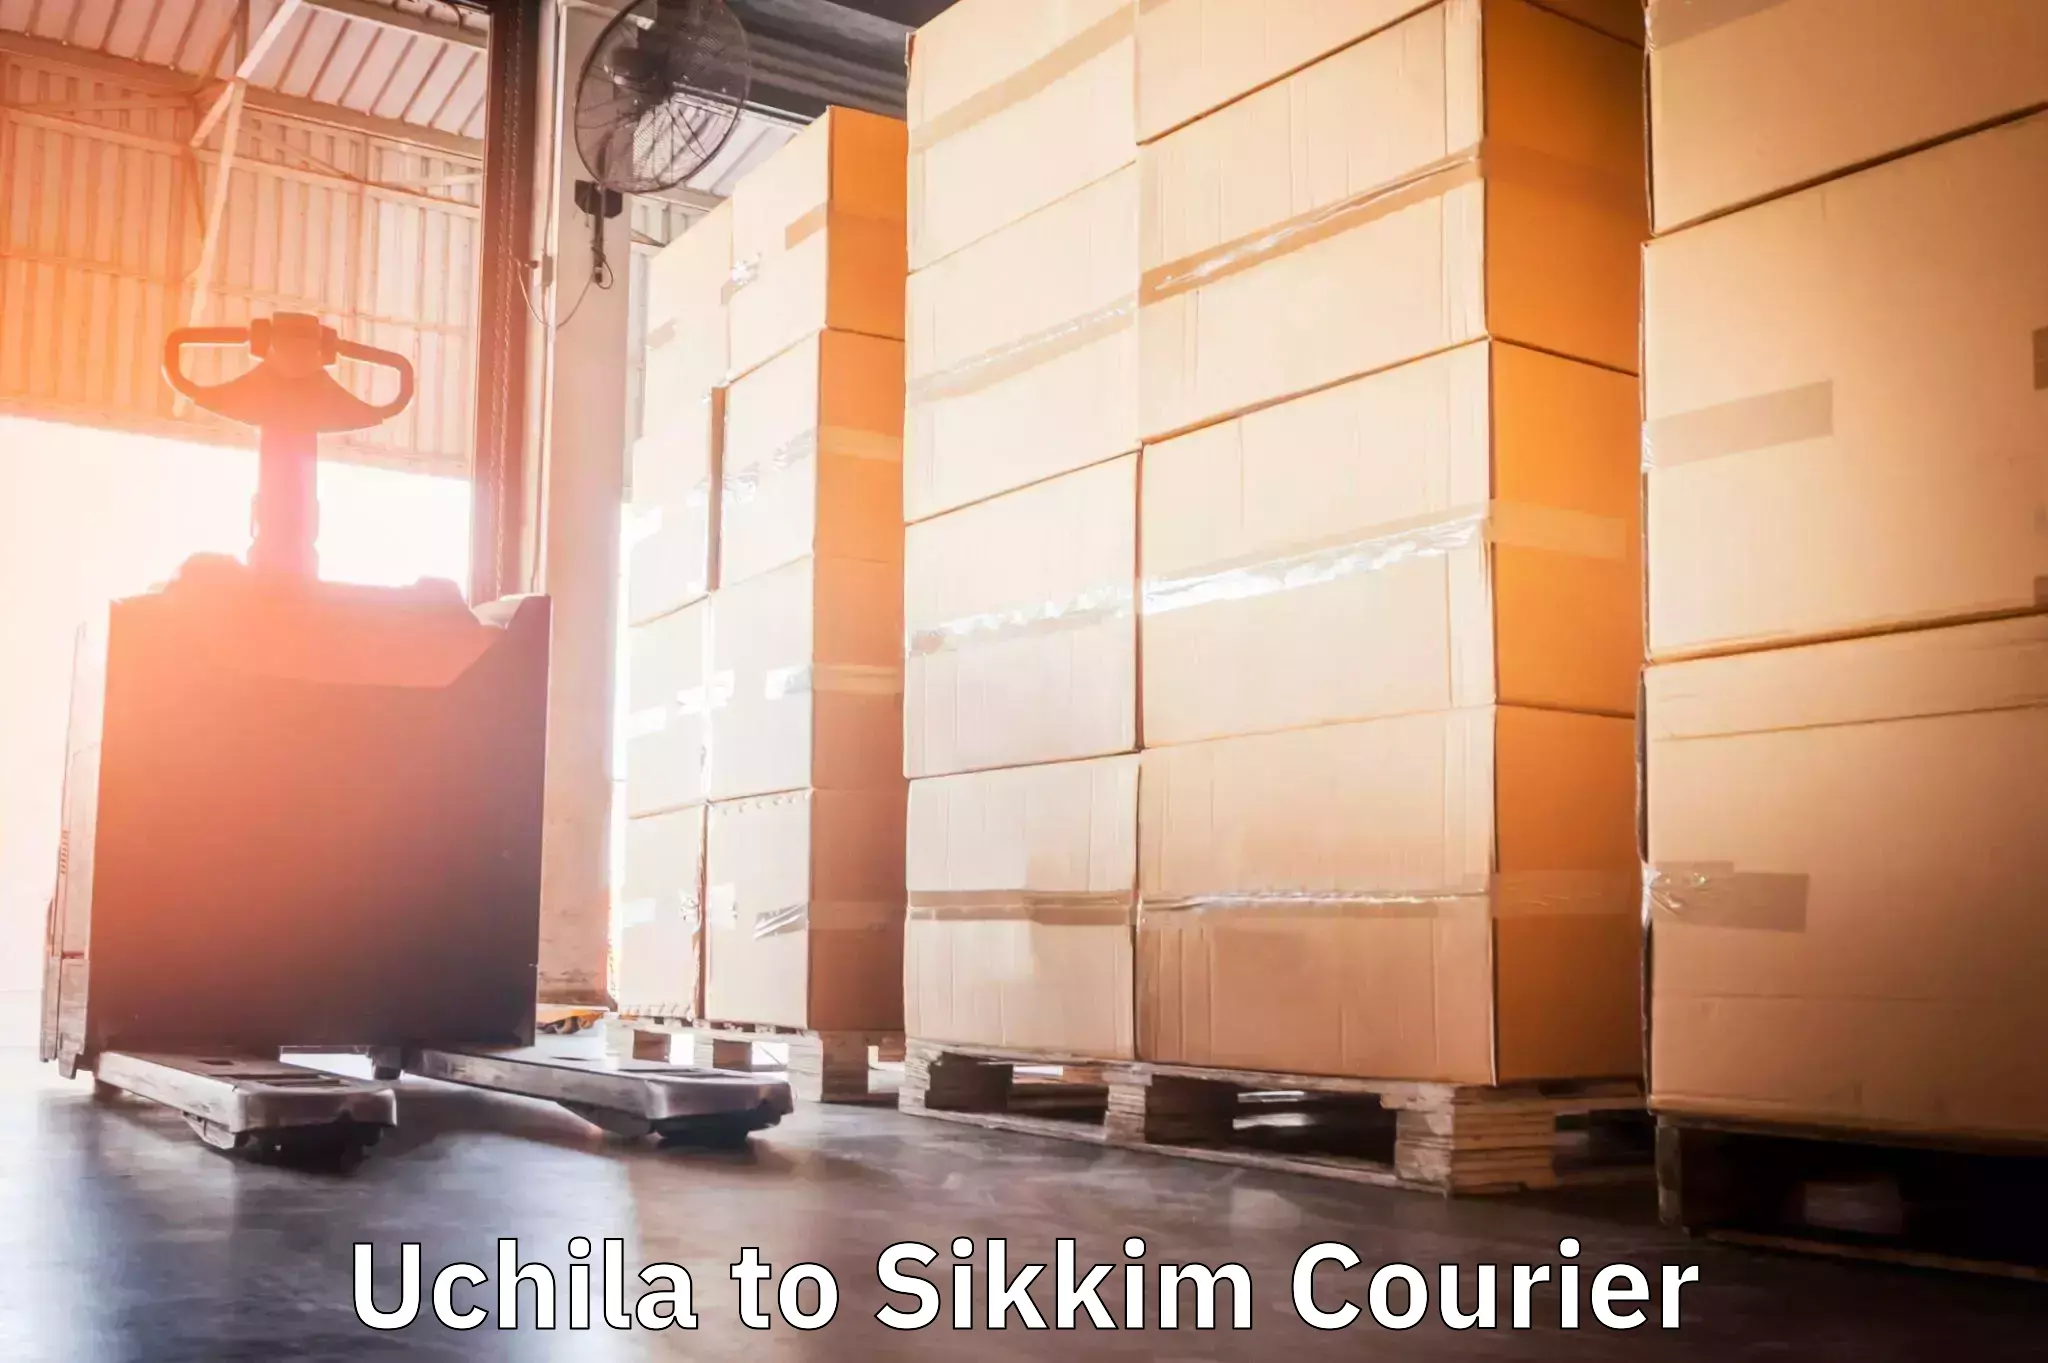 State-of-the-art courier technology Uchila to Mangan